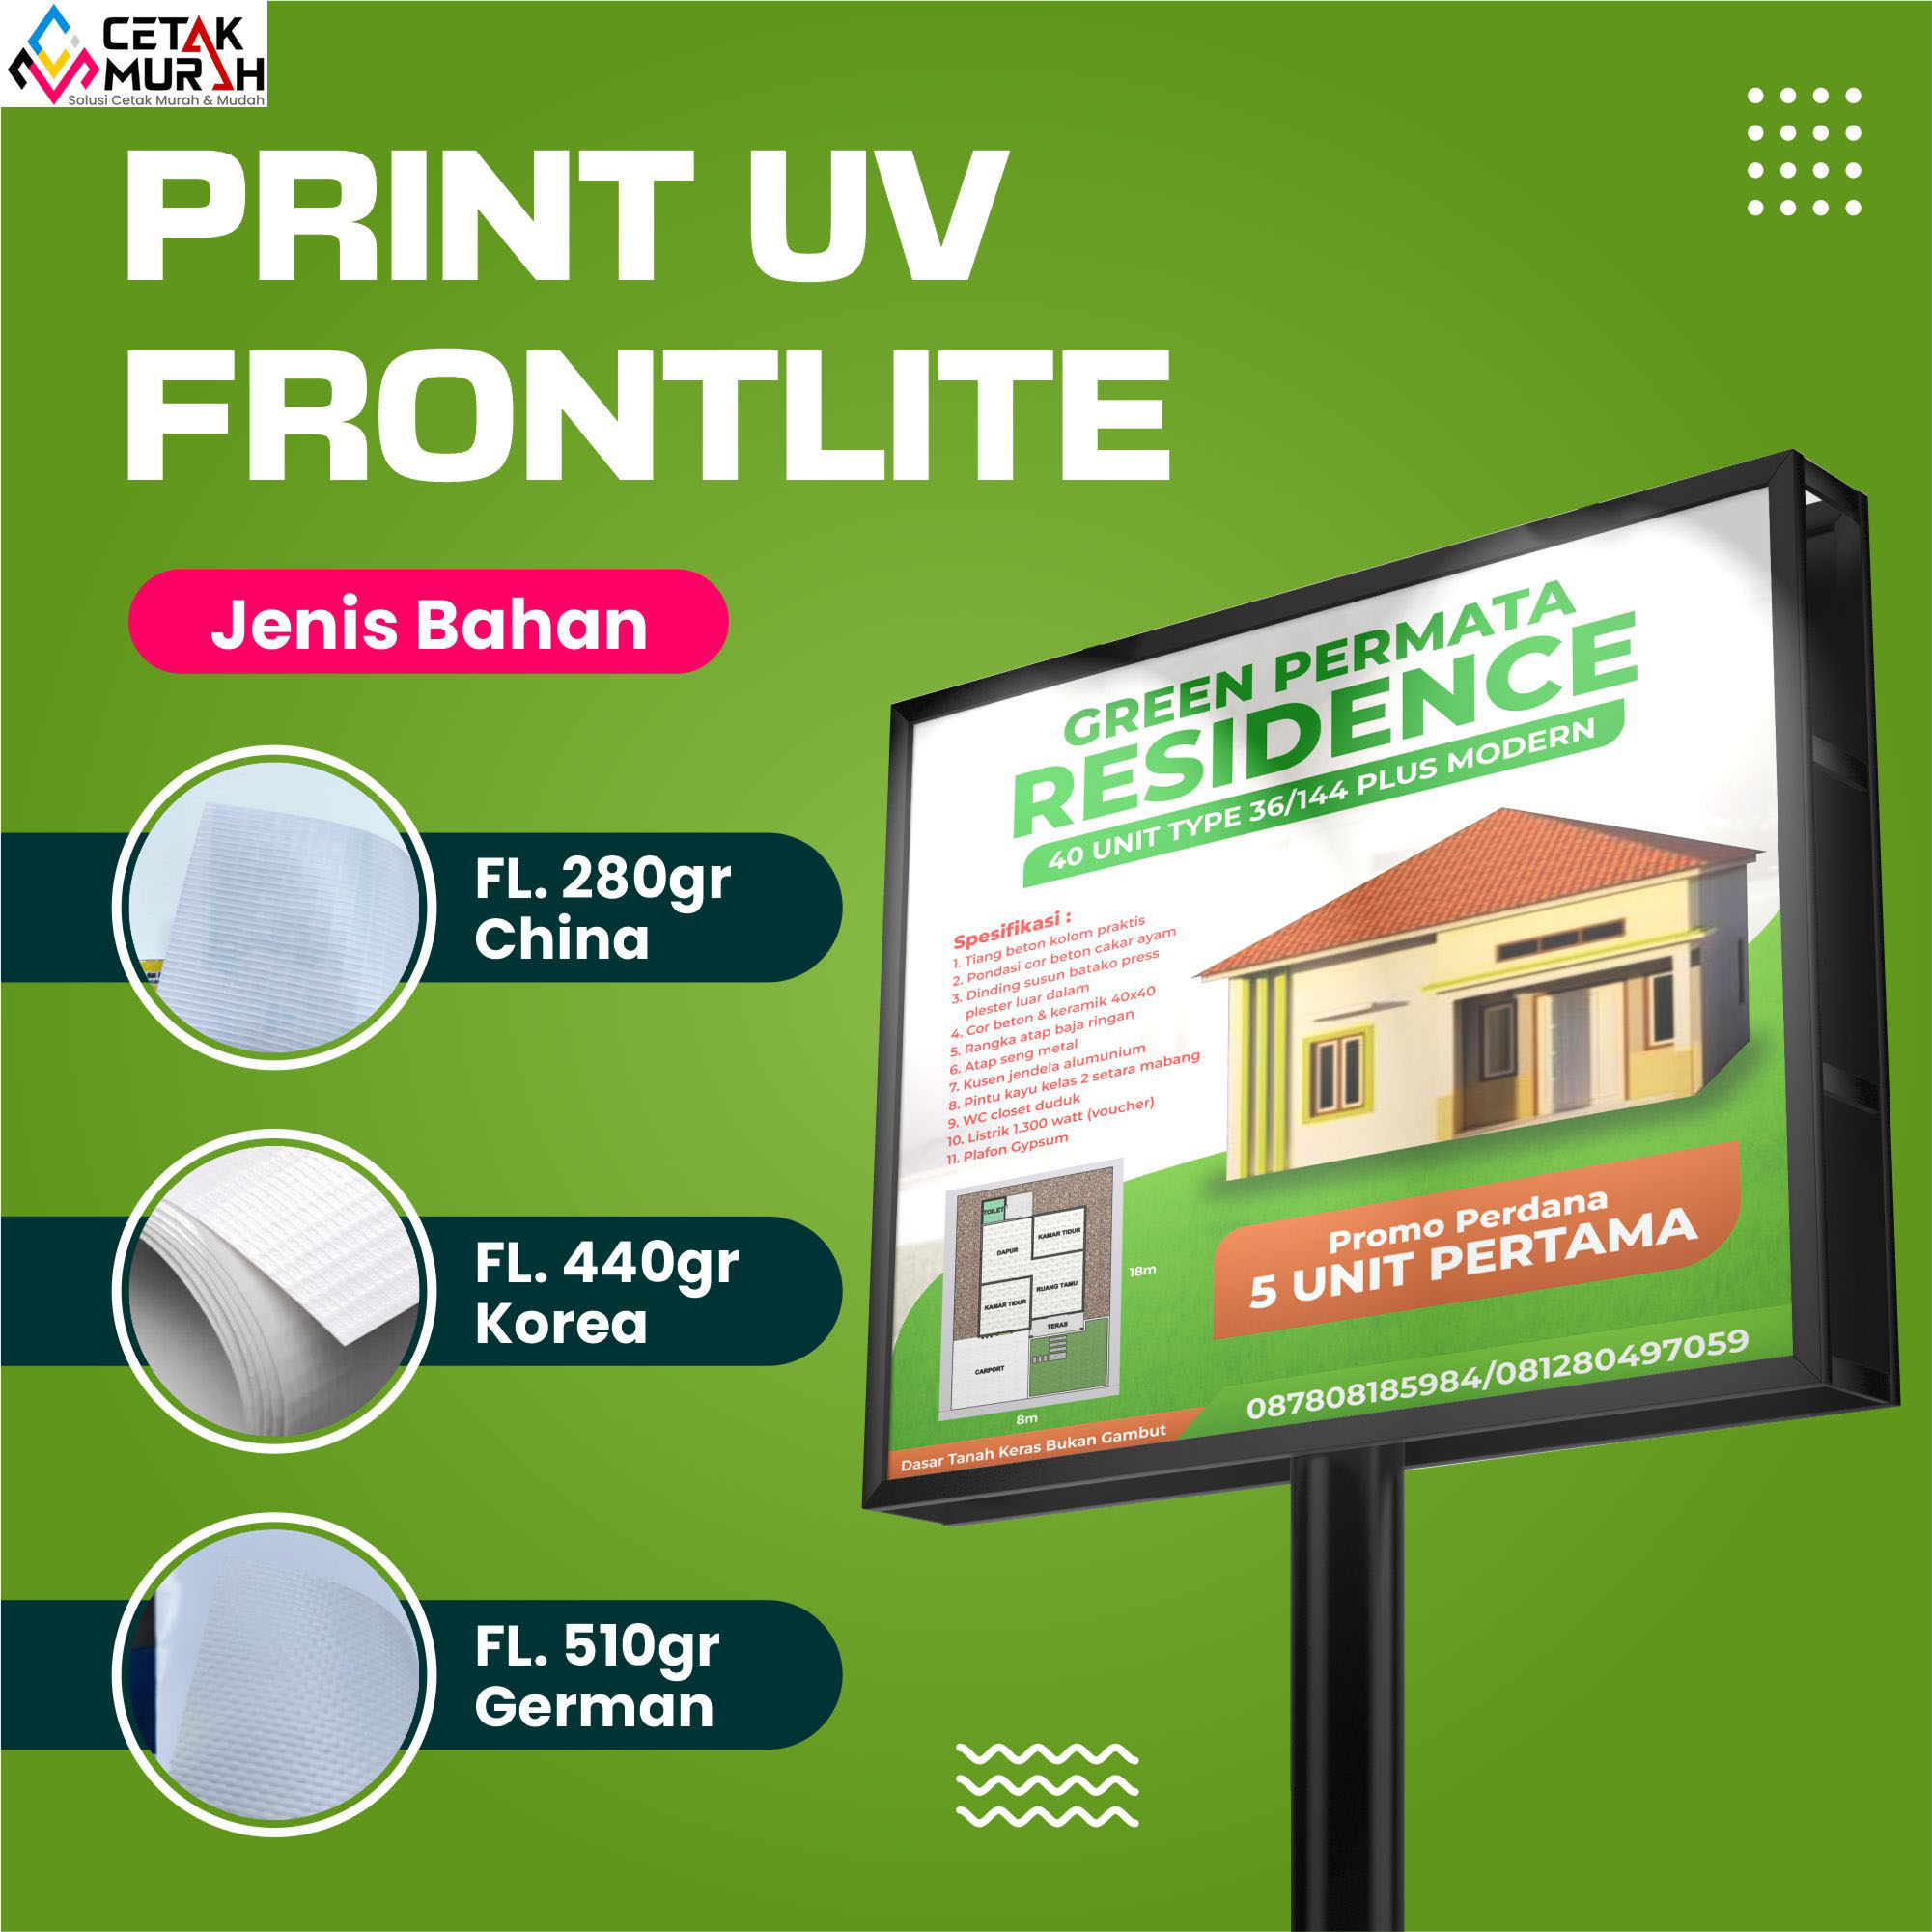 Frontlite Print UV